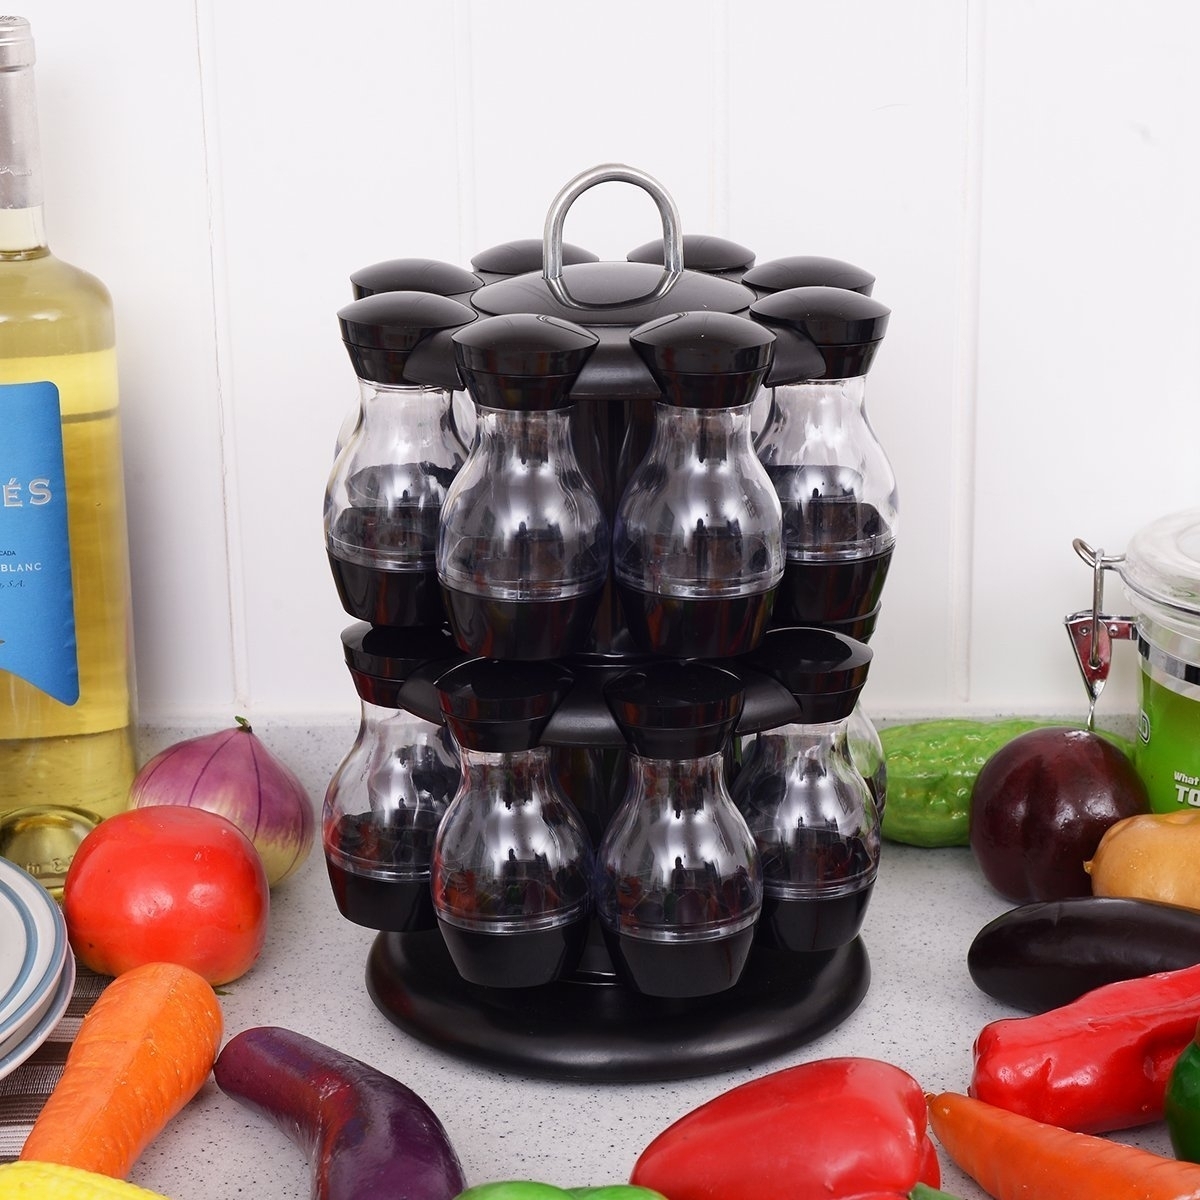 16 Jar Black Rotating Spice Rack Carousel Kitchen Condiments Storage Holder - Black, Pack of 1